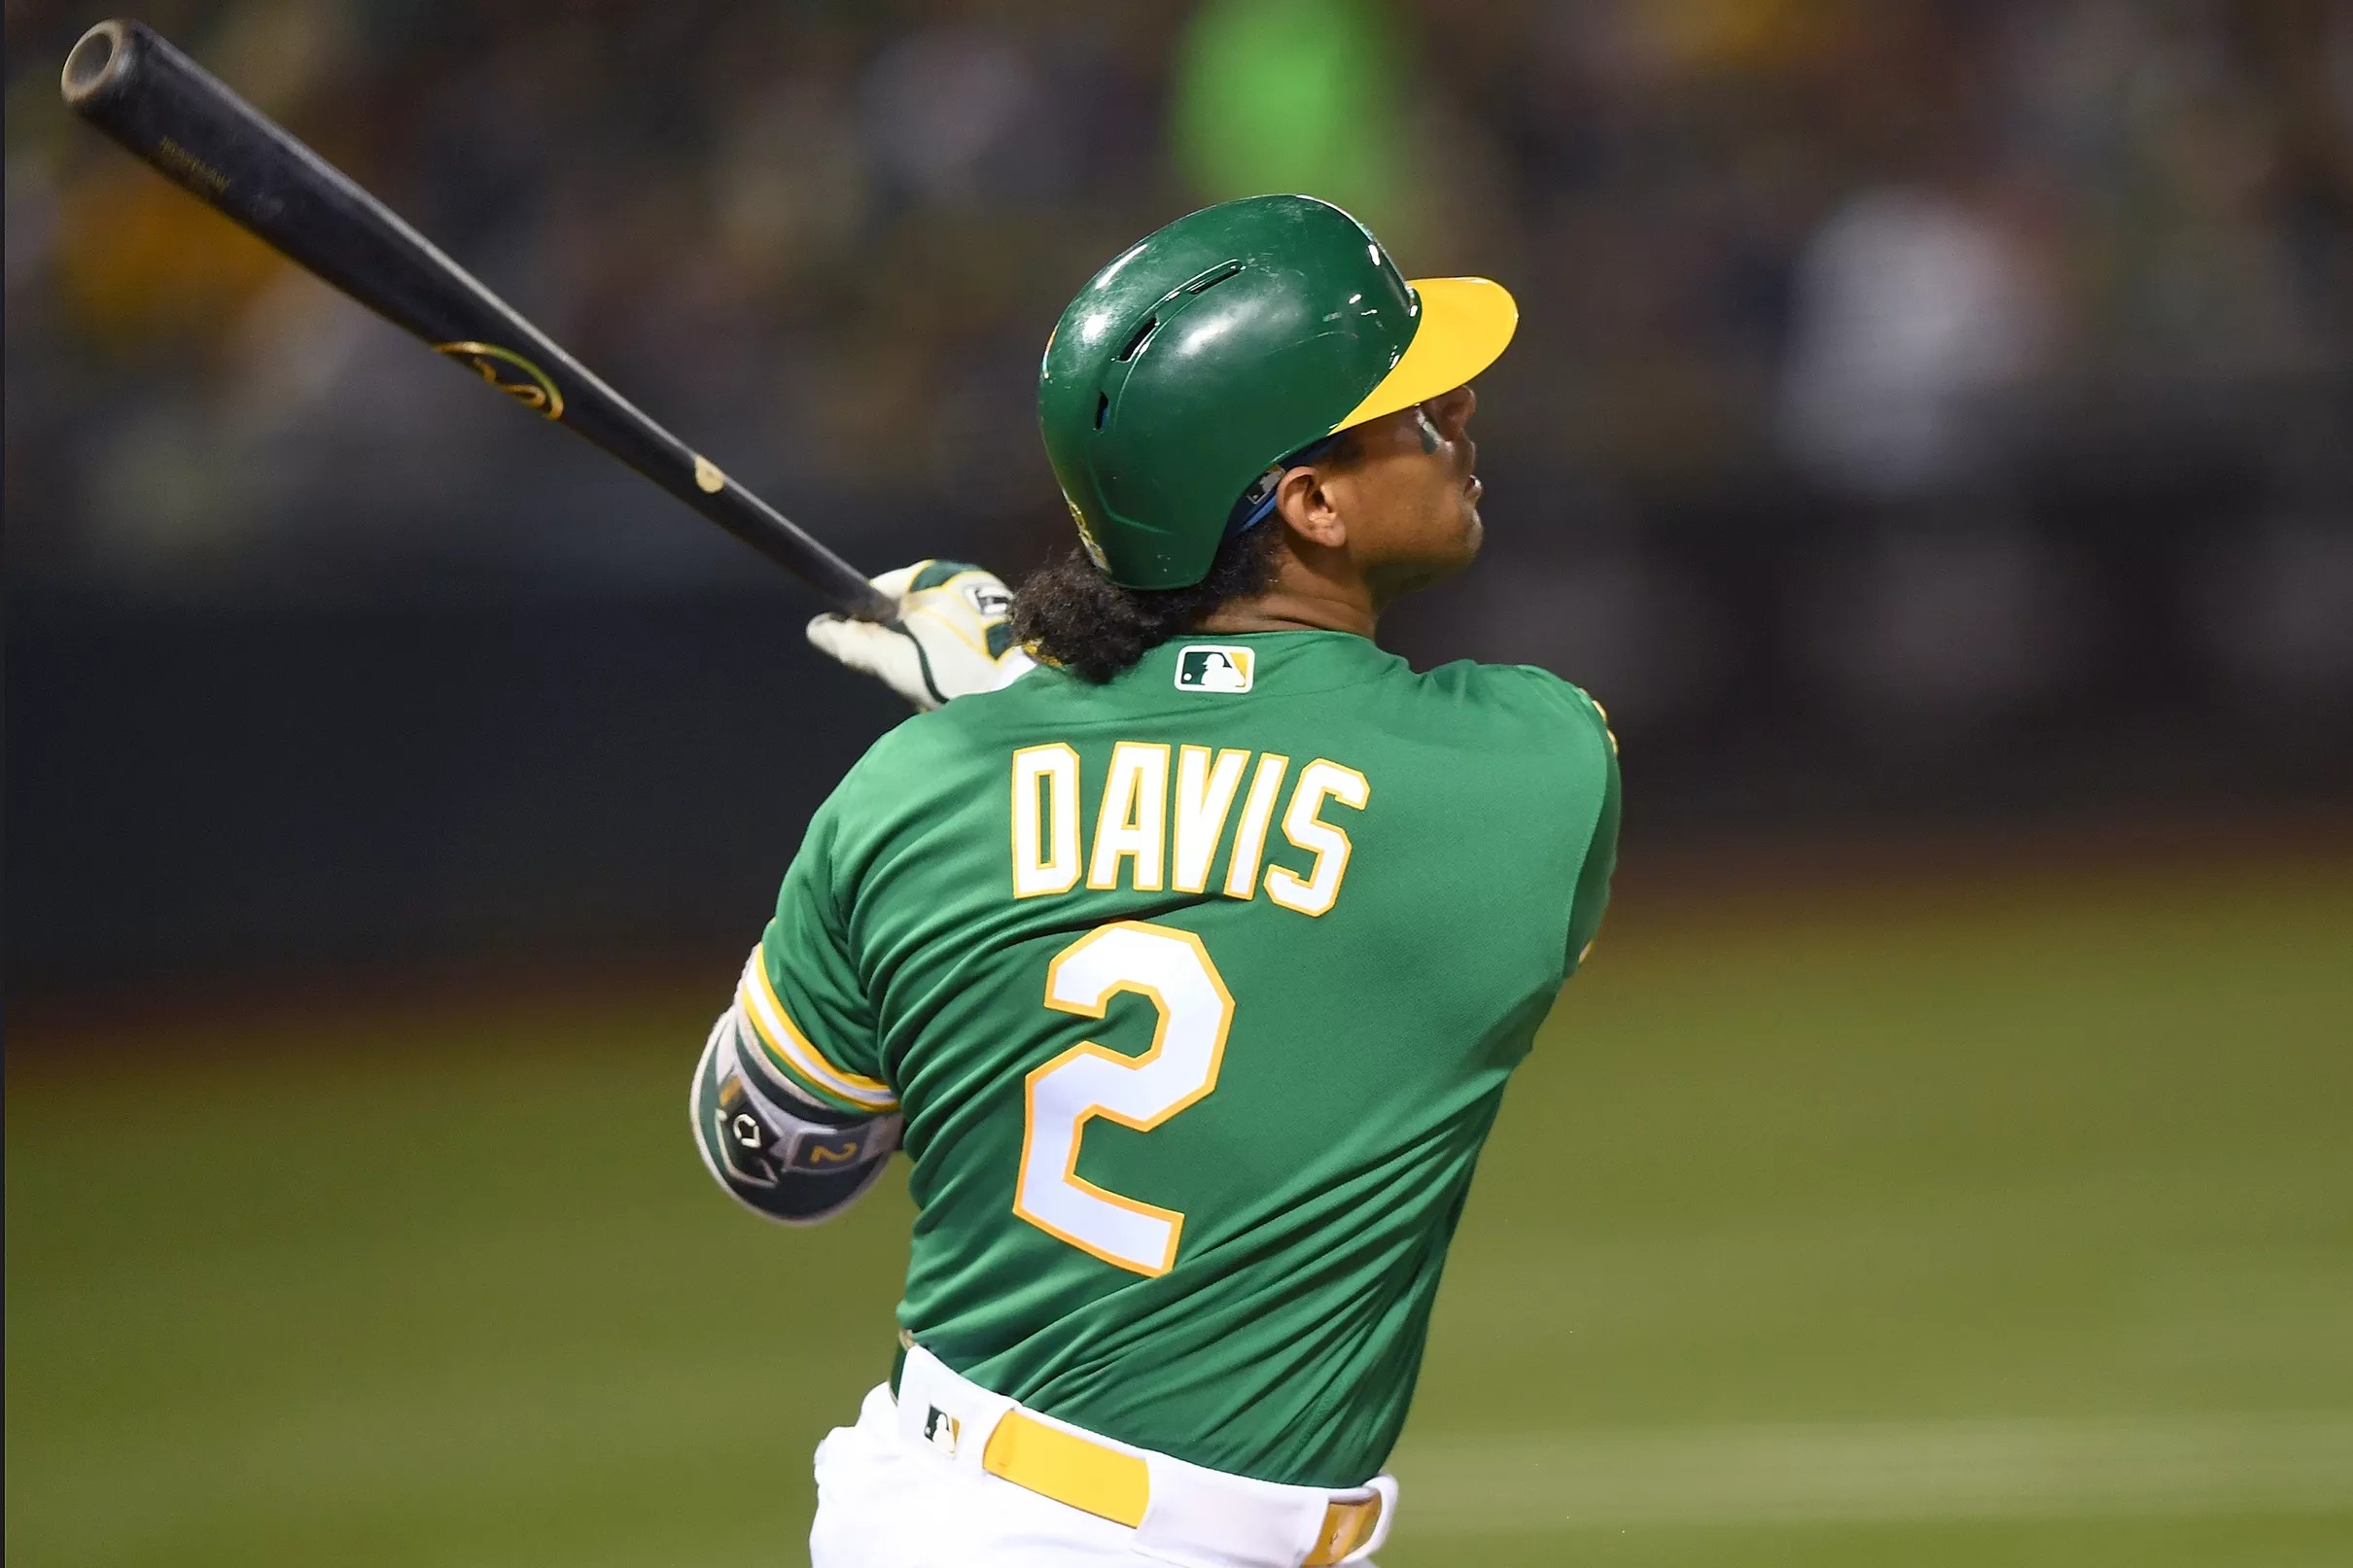 Khris Davis is the best home run hitter in baseball